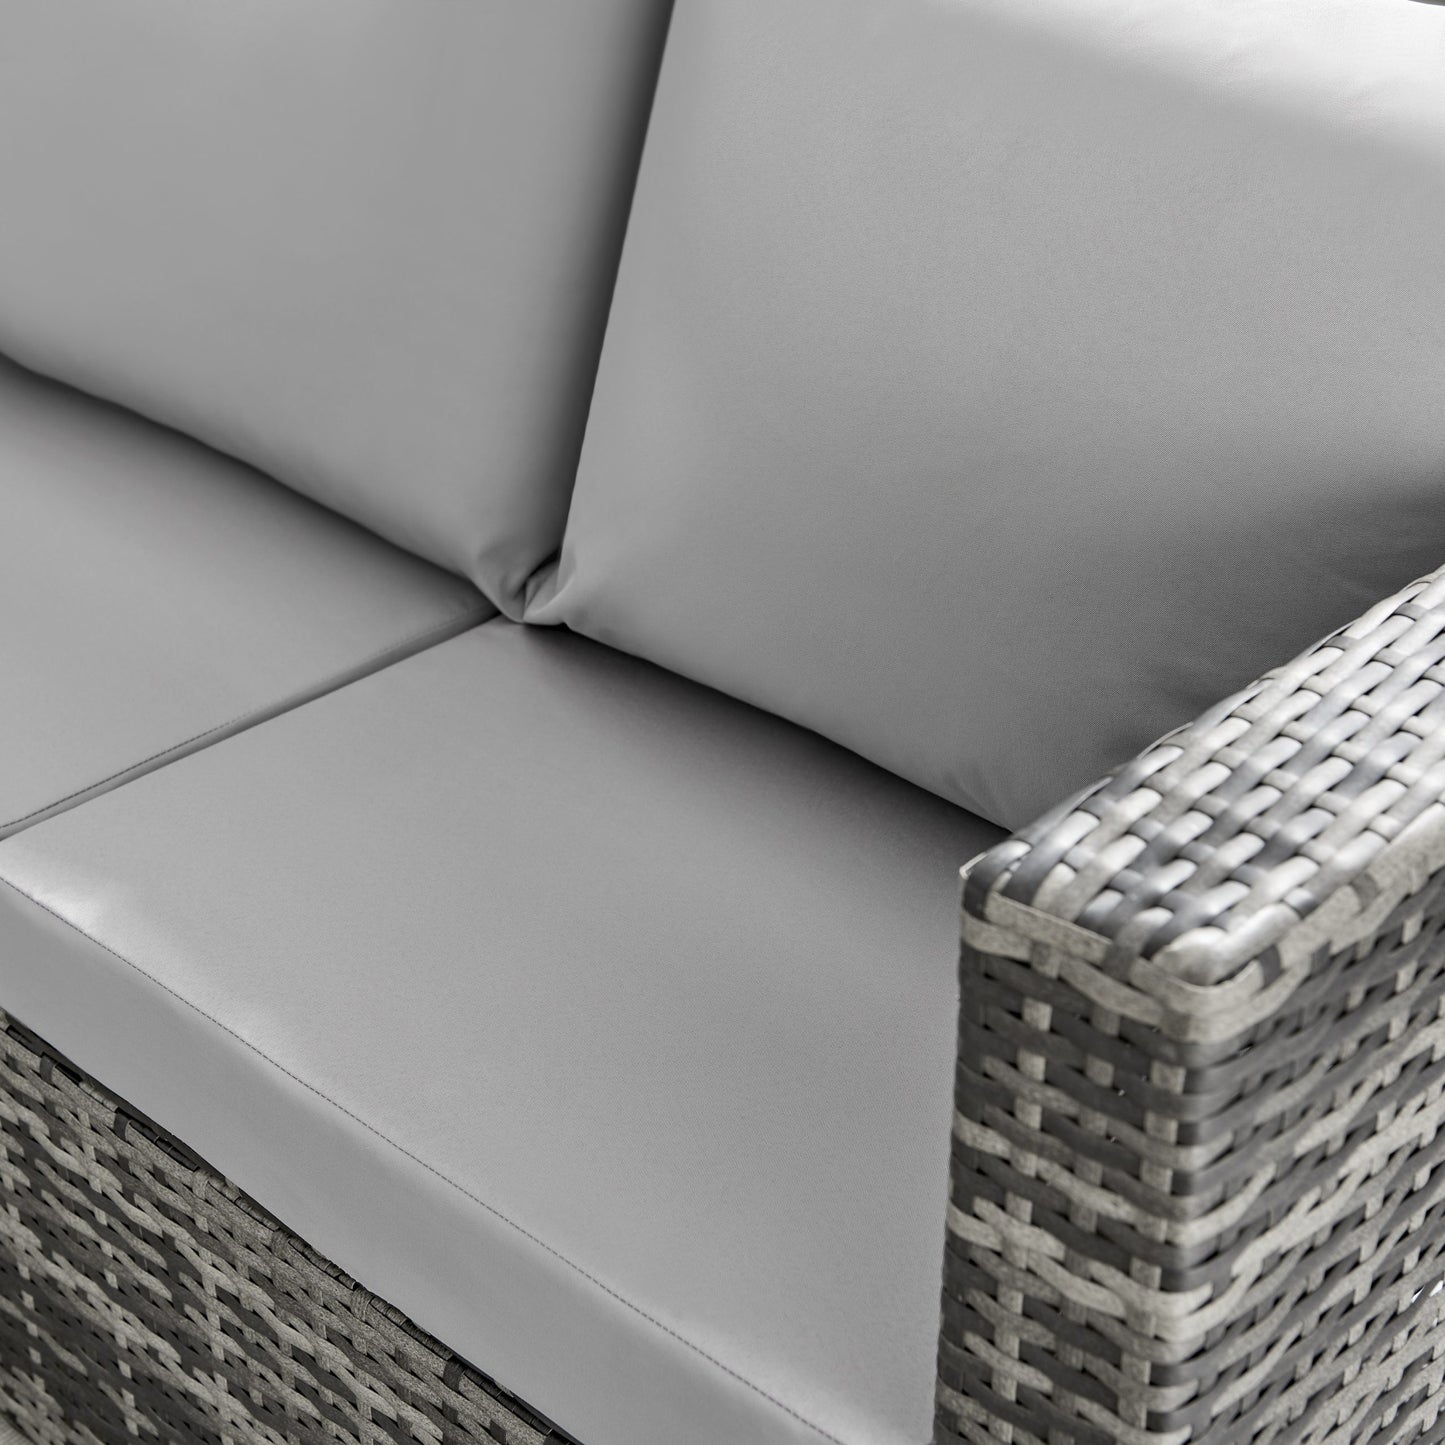 Malibu Grey 3 Seater L Shape Rattan Sofa and Coffee Table Set